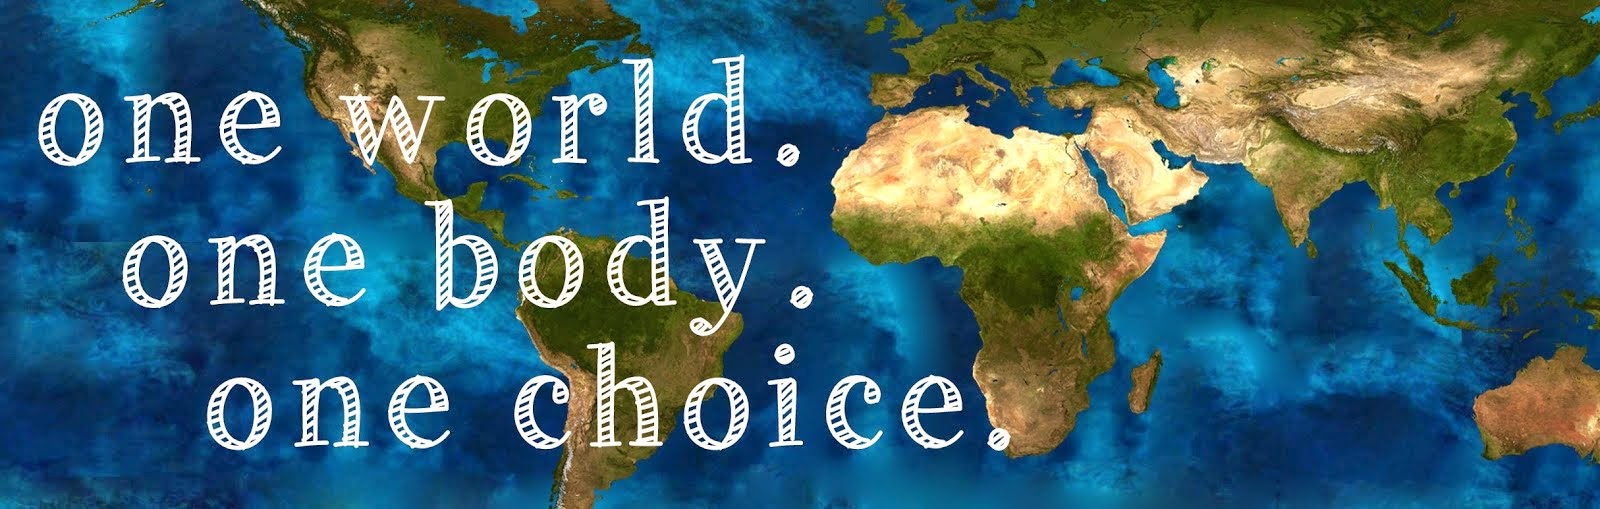 one world. one body. one choice.